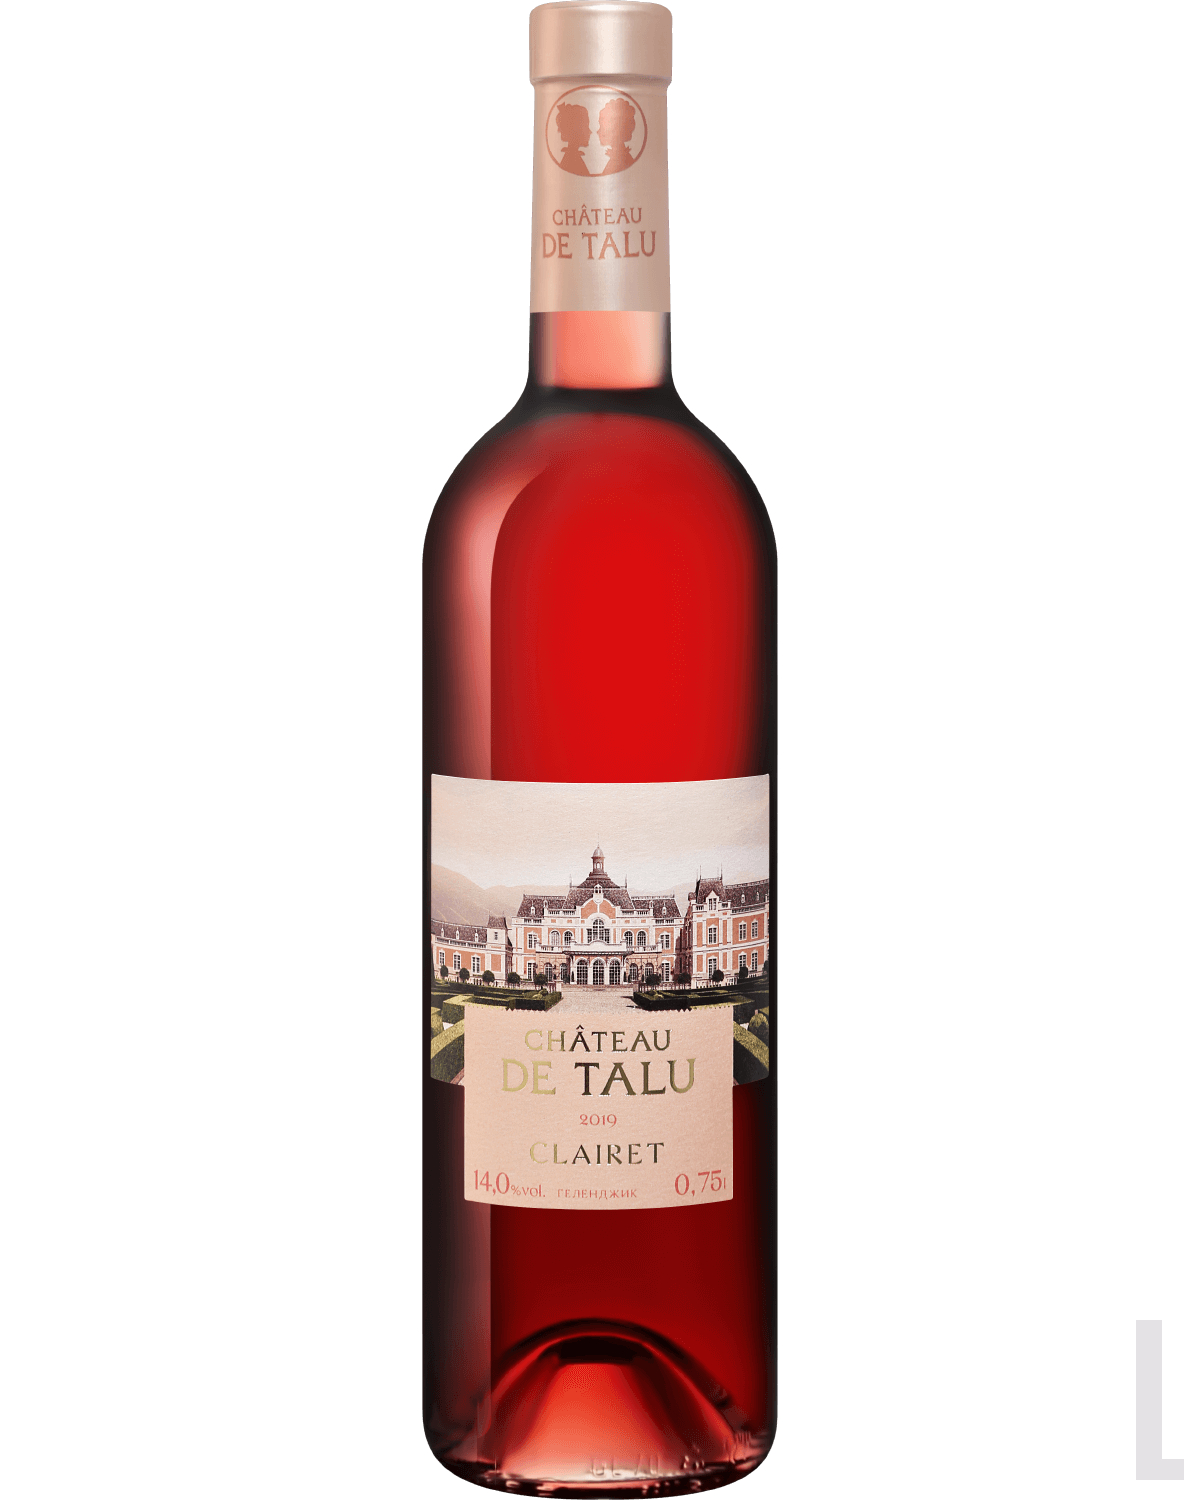 Каберне розовое сухое. Вино Кубань Руж де Талю. Шато де Талю розовое вино.